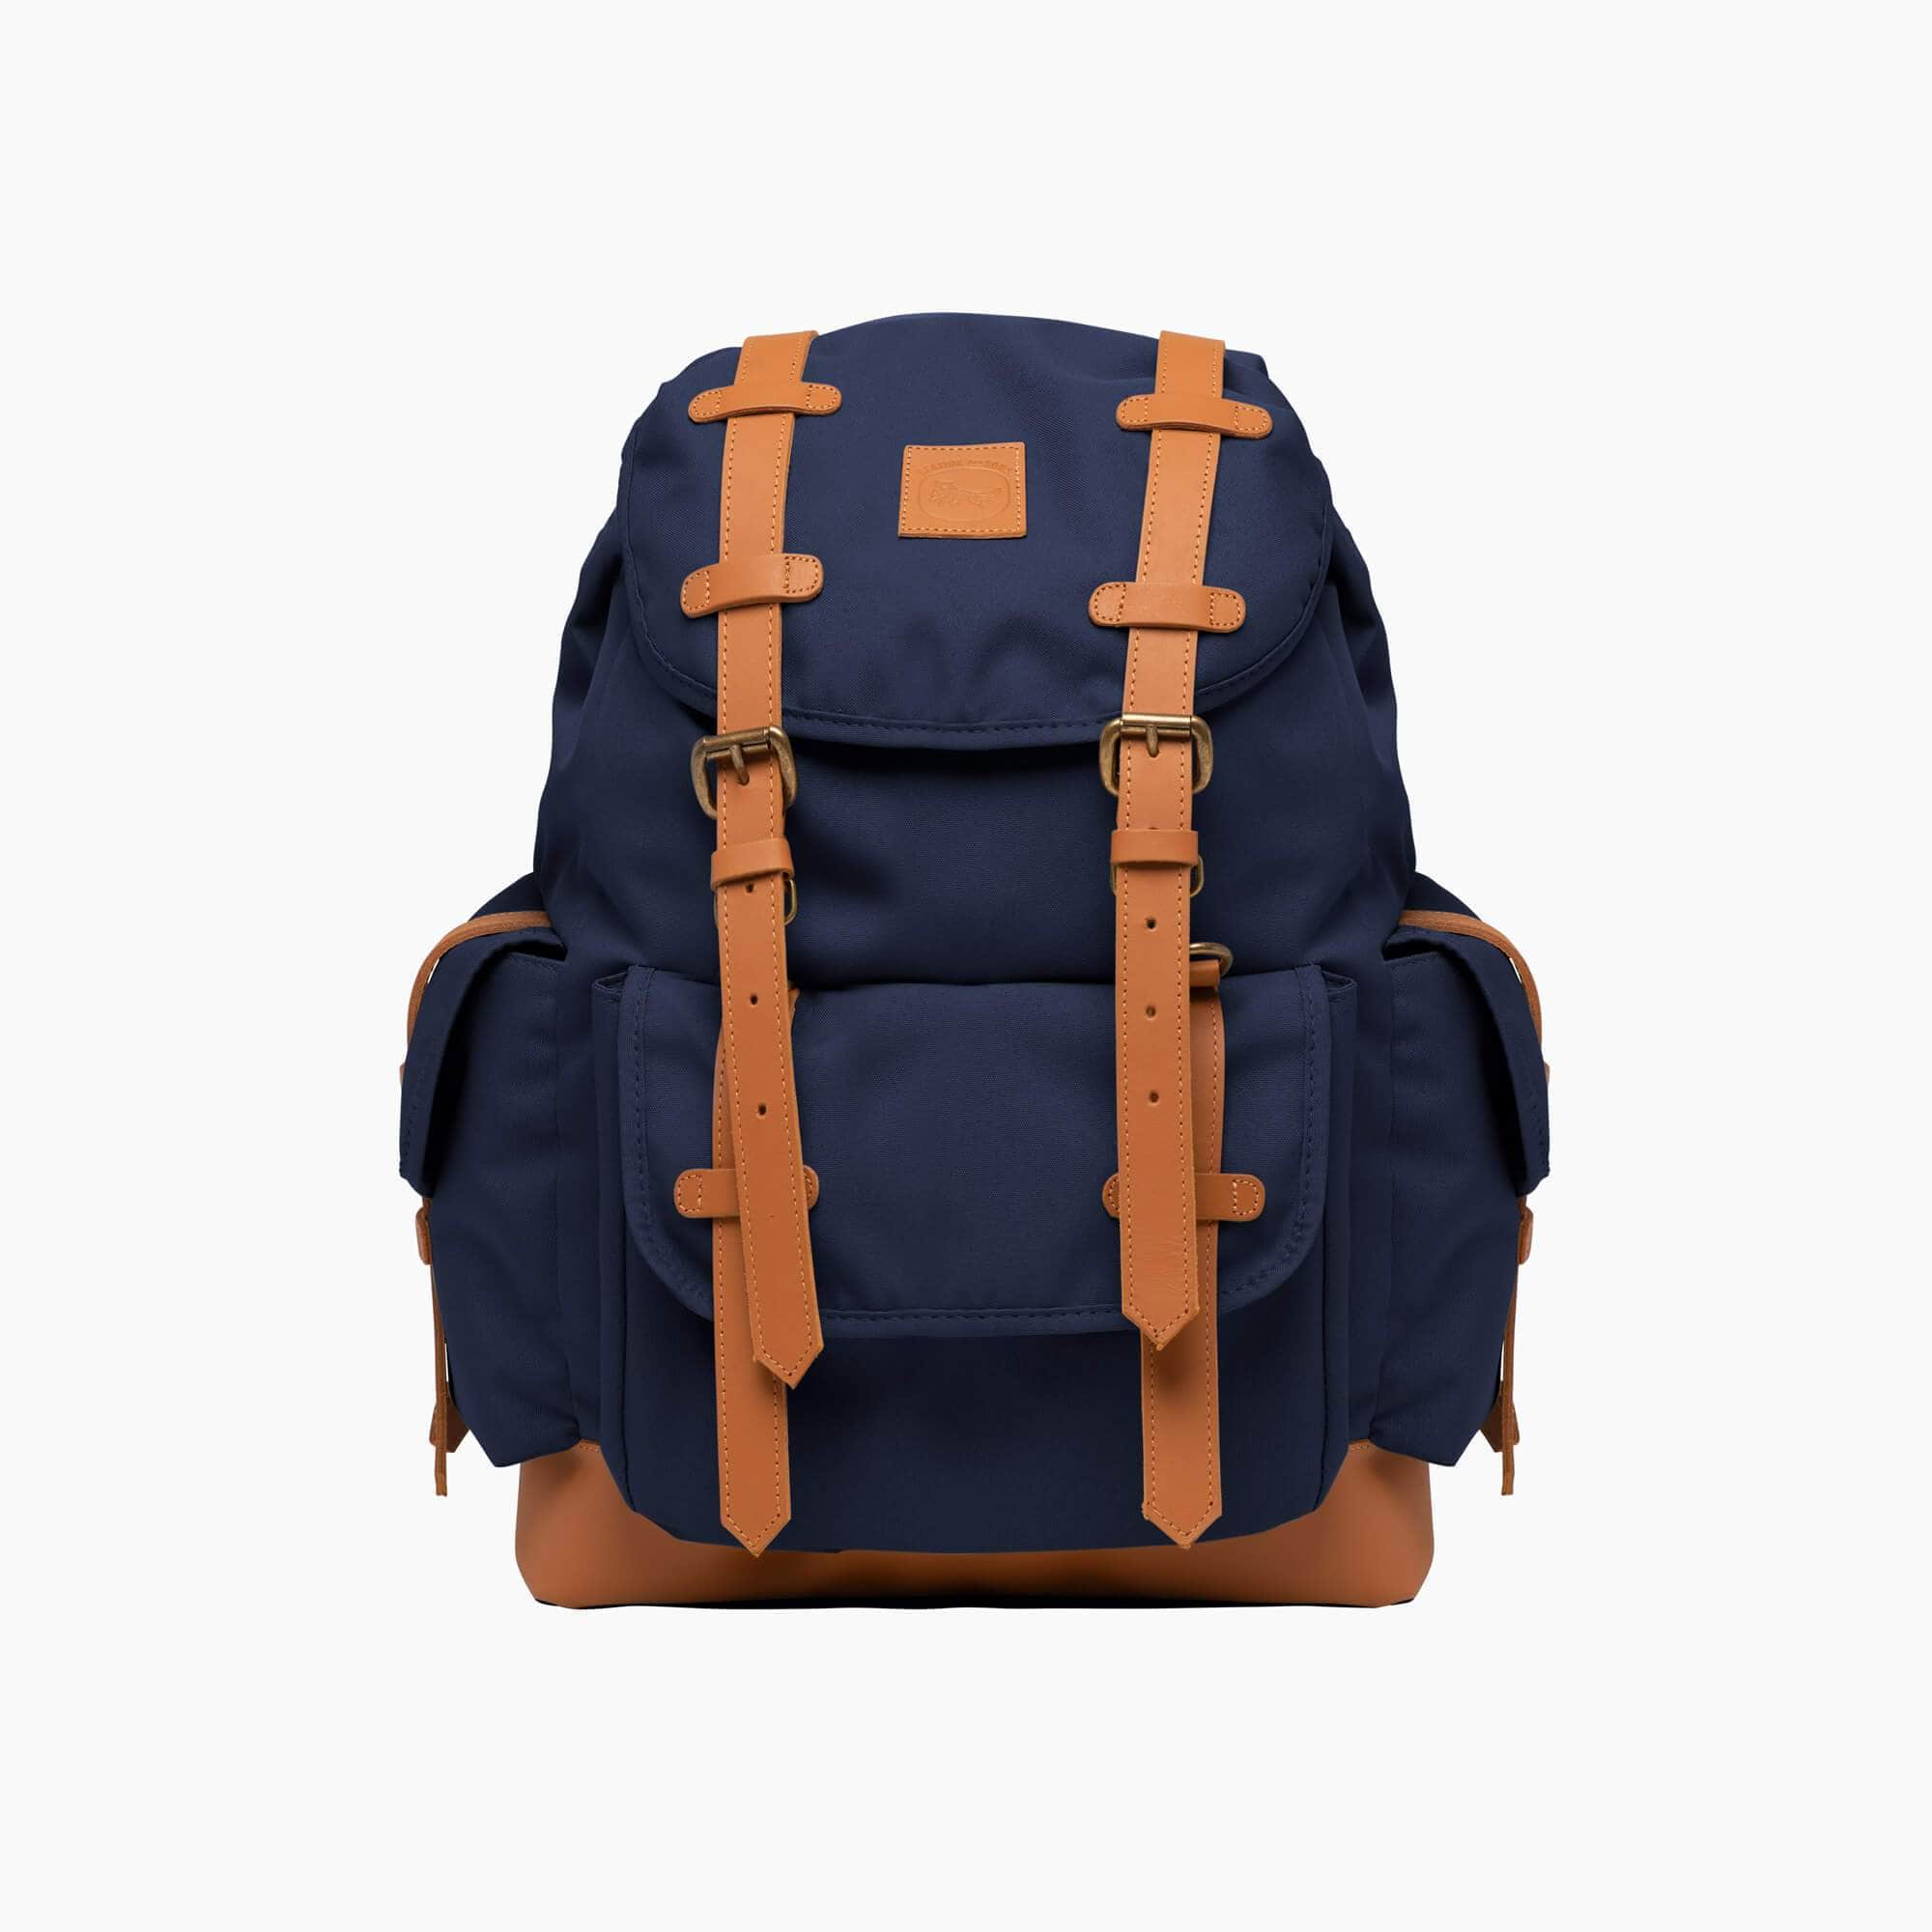 the Henry backpack– Beatnik & Sons